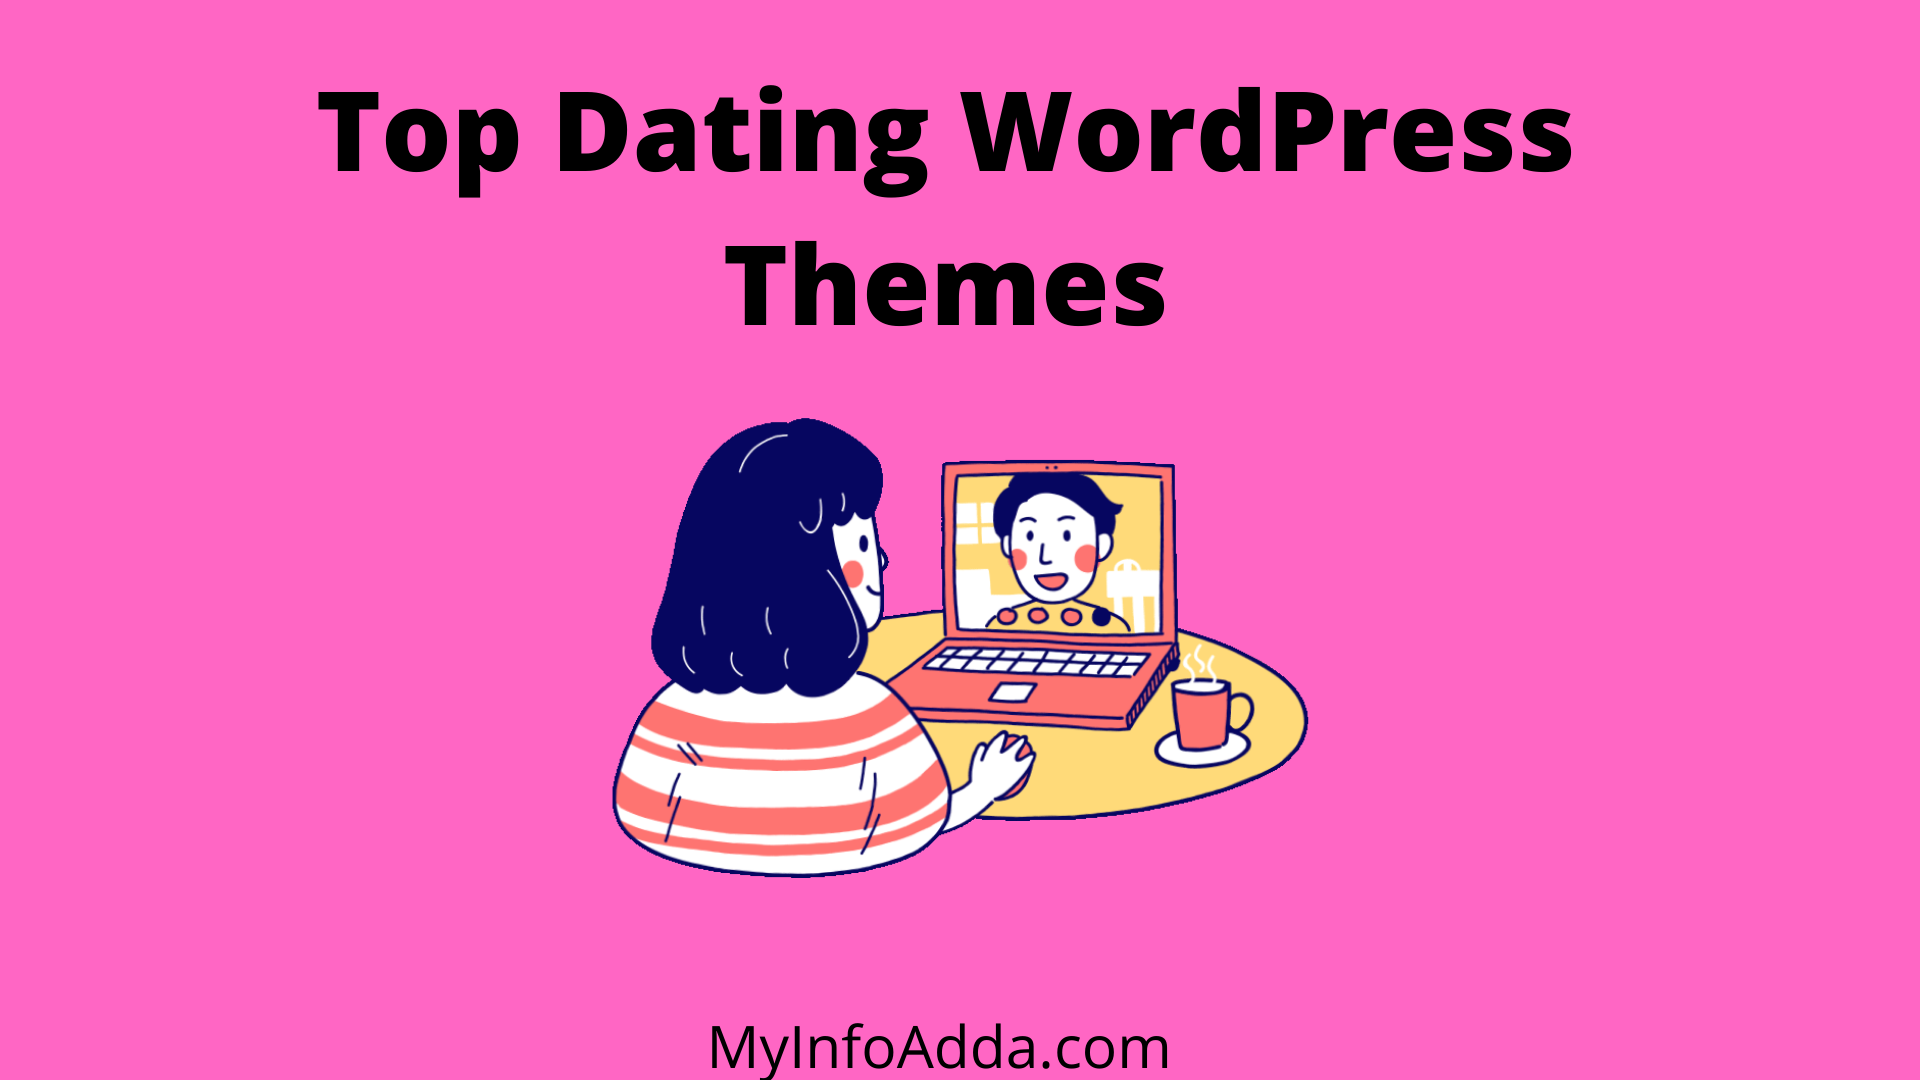 Top Dating WordPress Themes